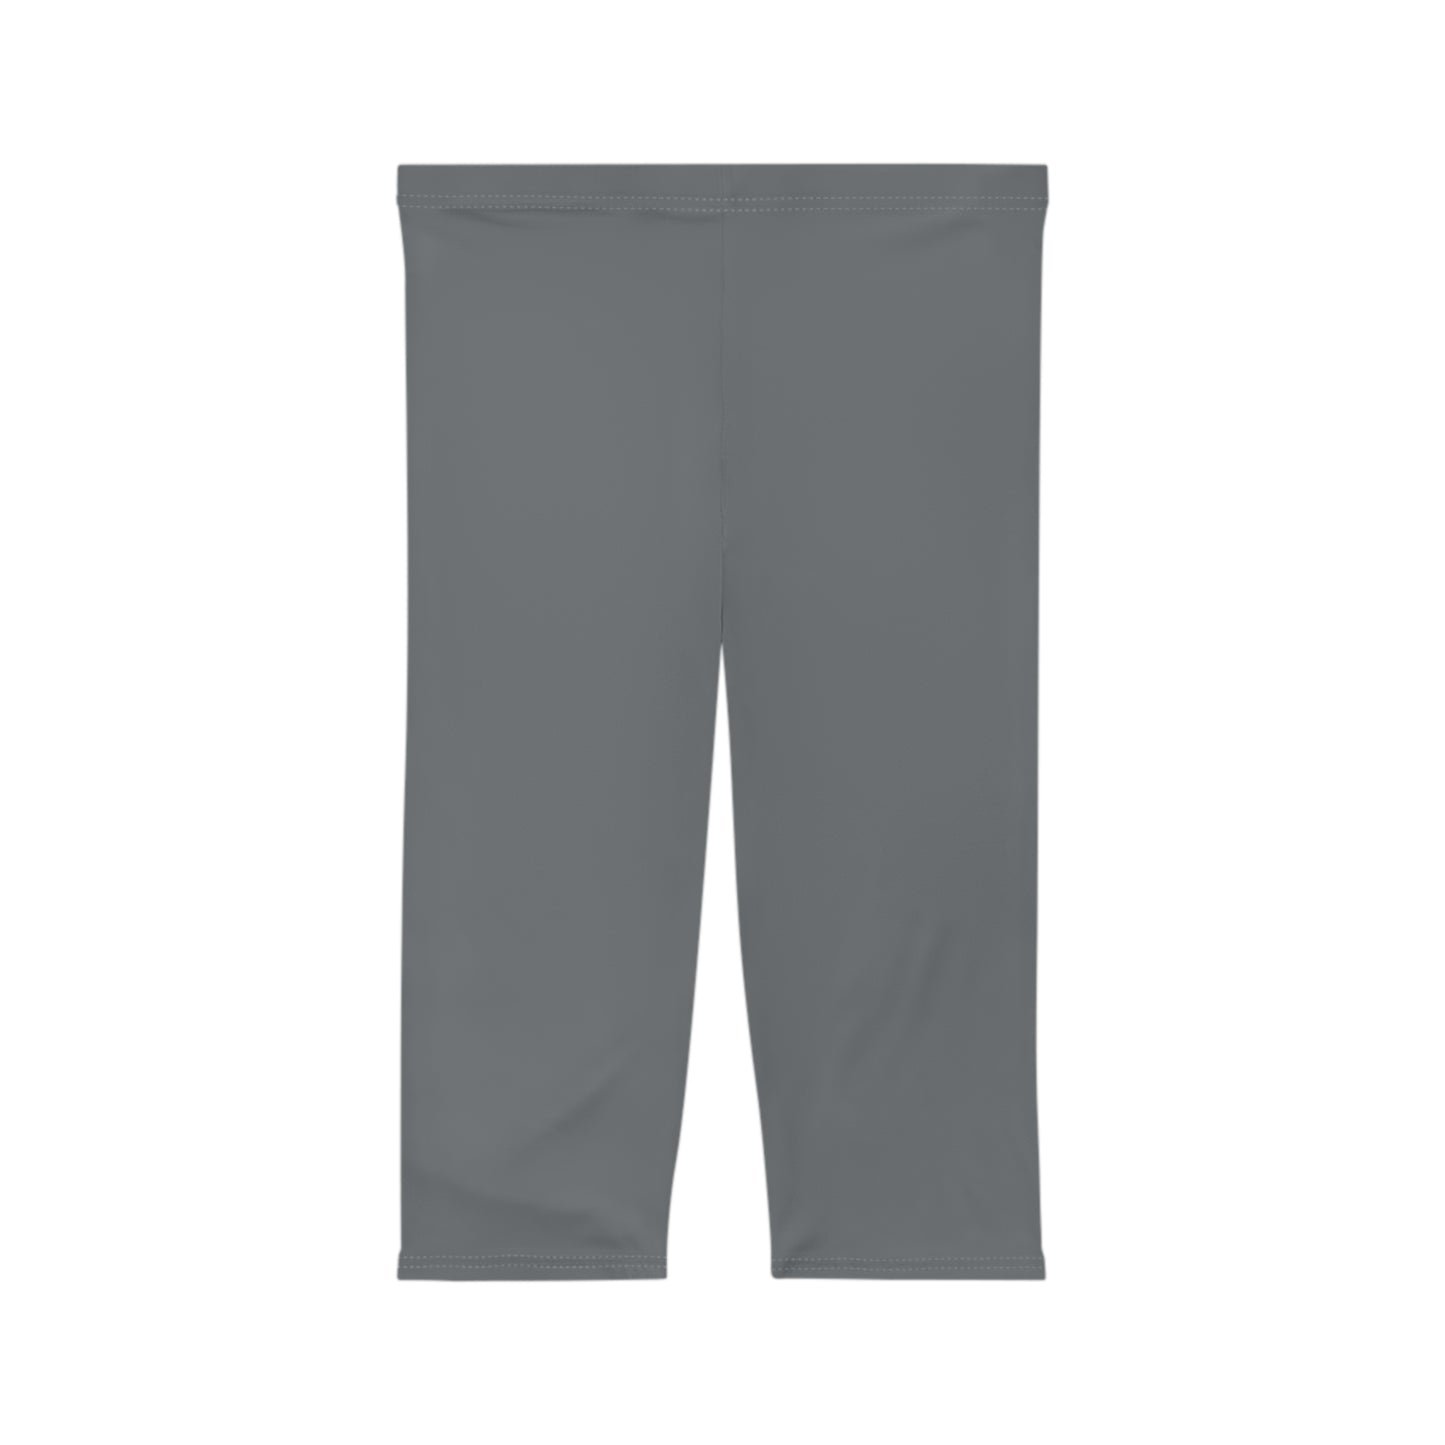 #777B7E Steel Grey - Capri Shorts